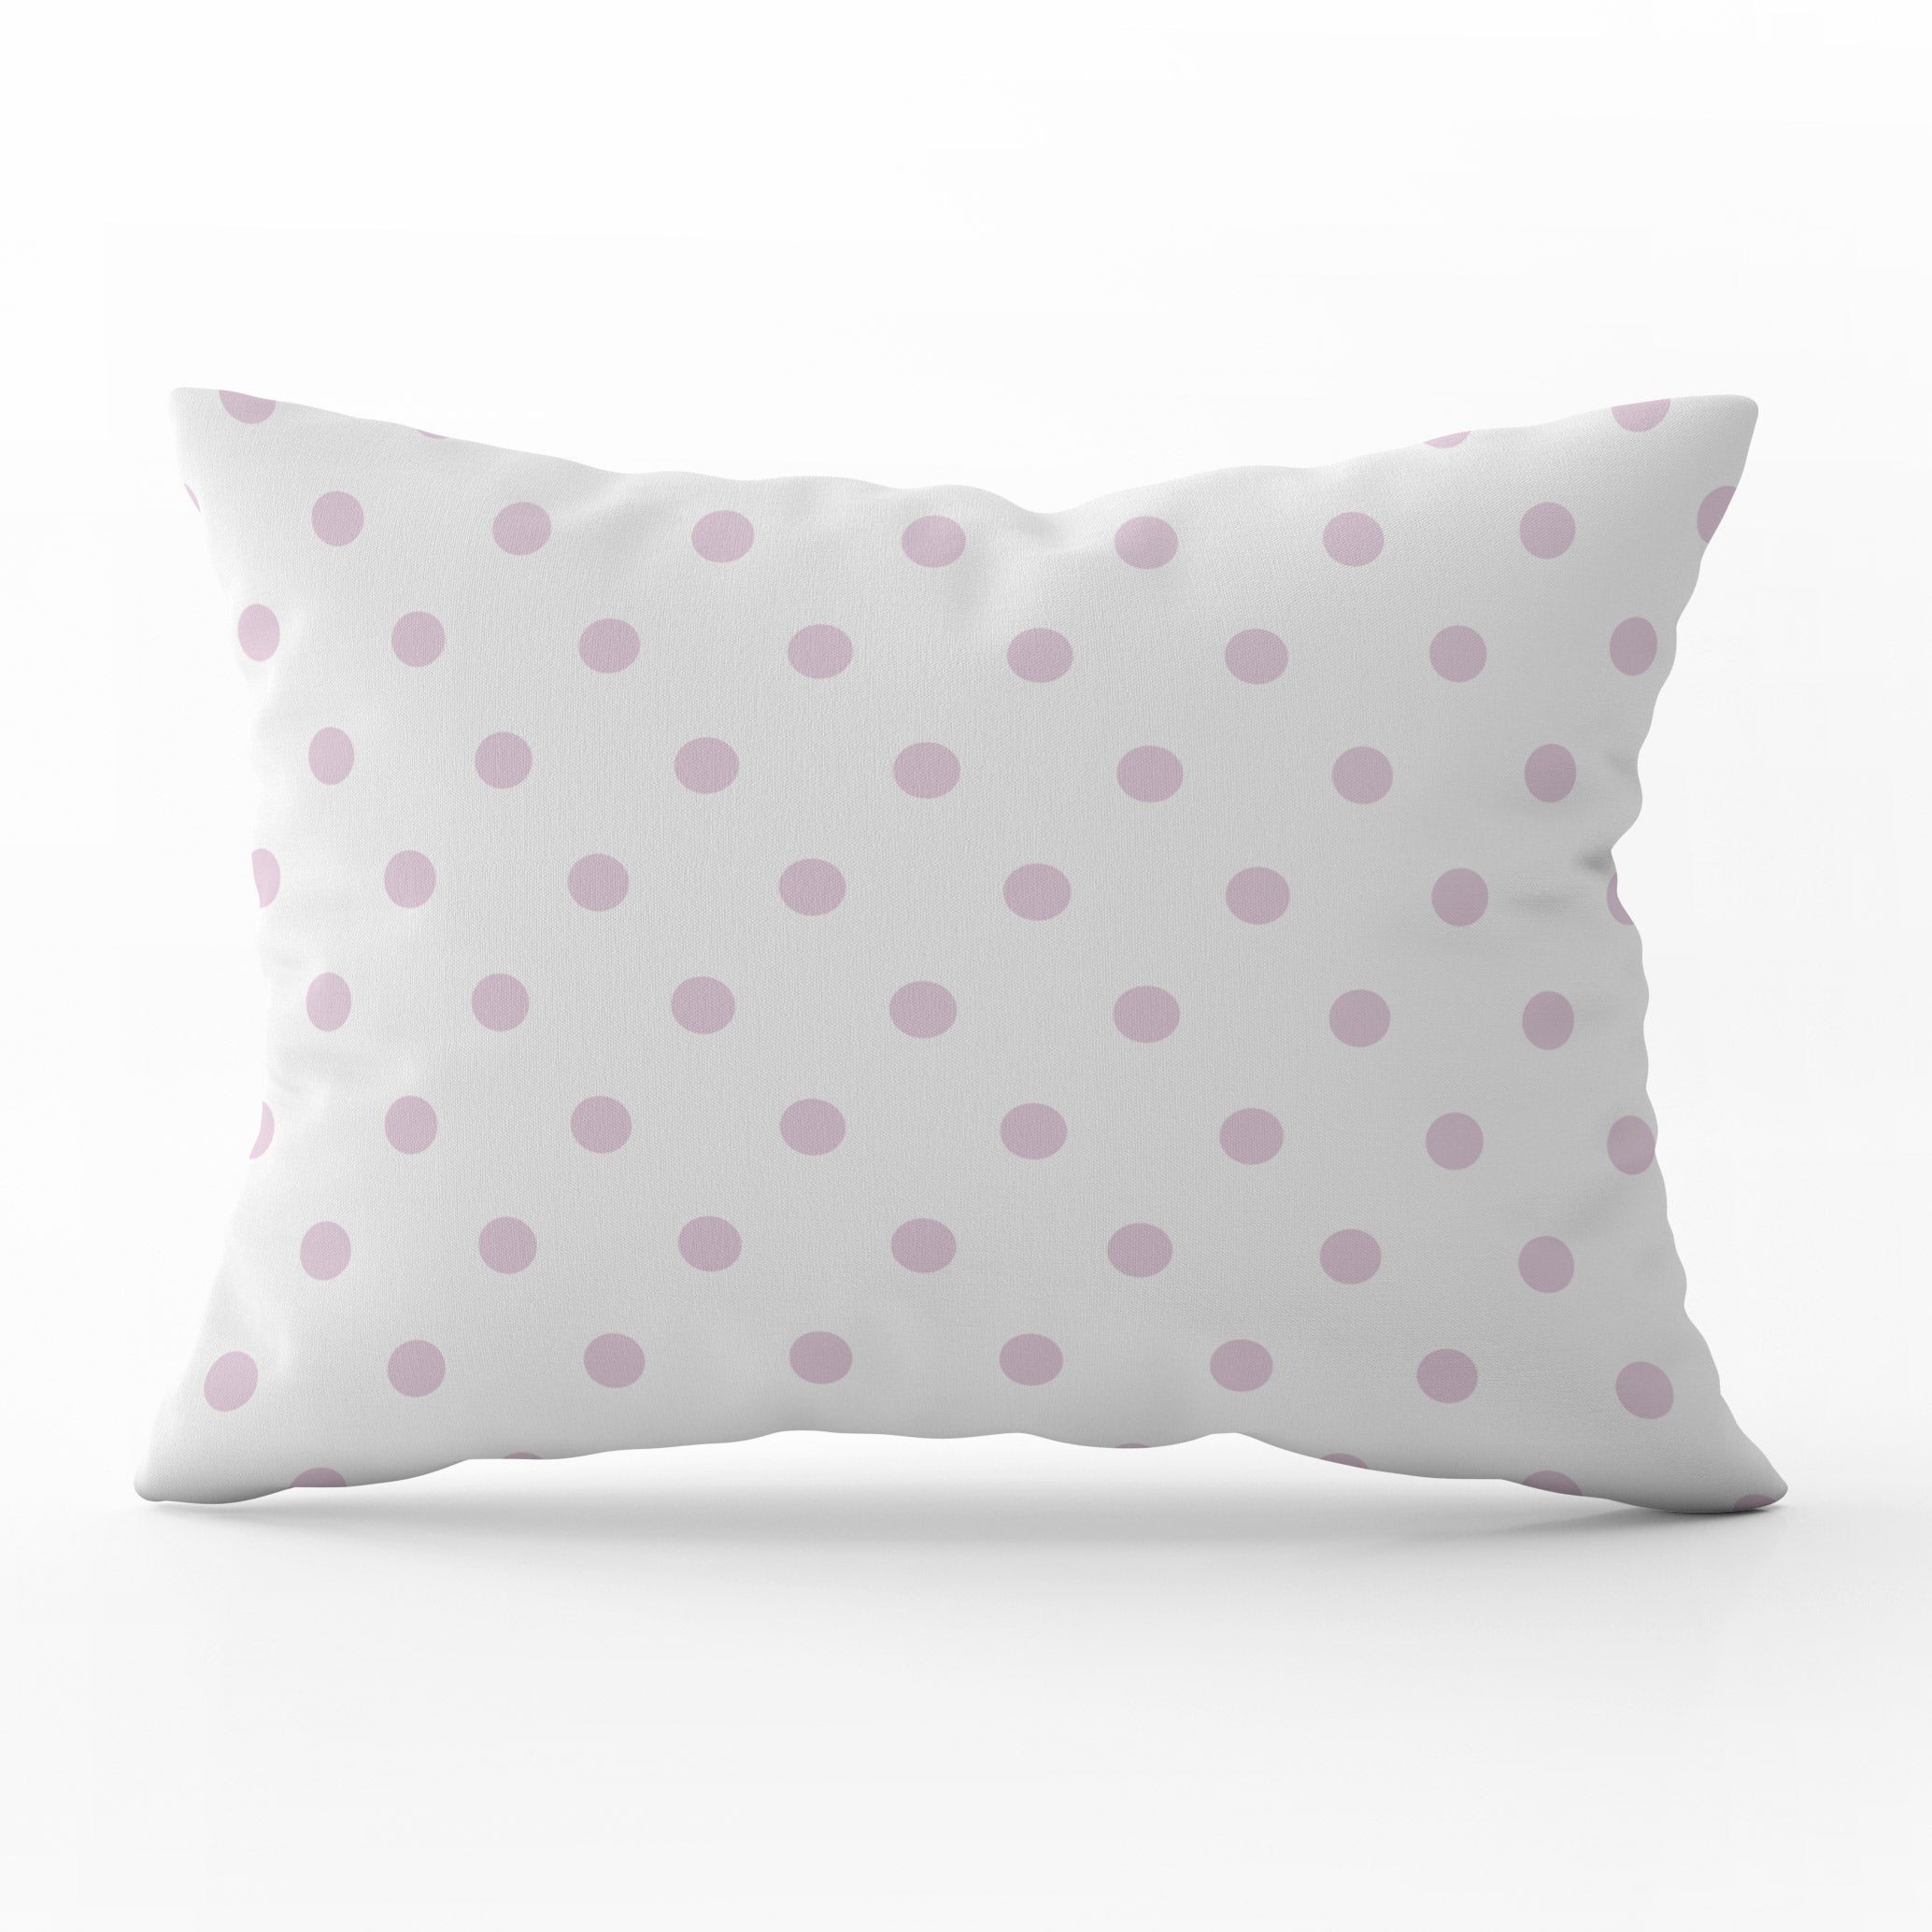 Spotty Day Cushion - Pinks - Hydrangea Lane Home